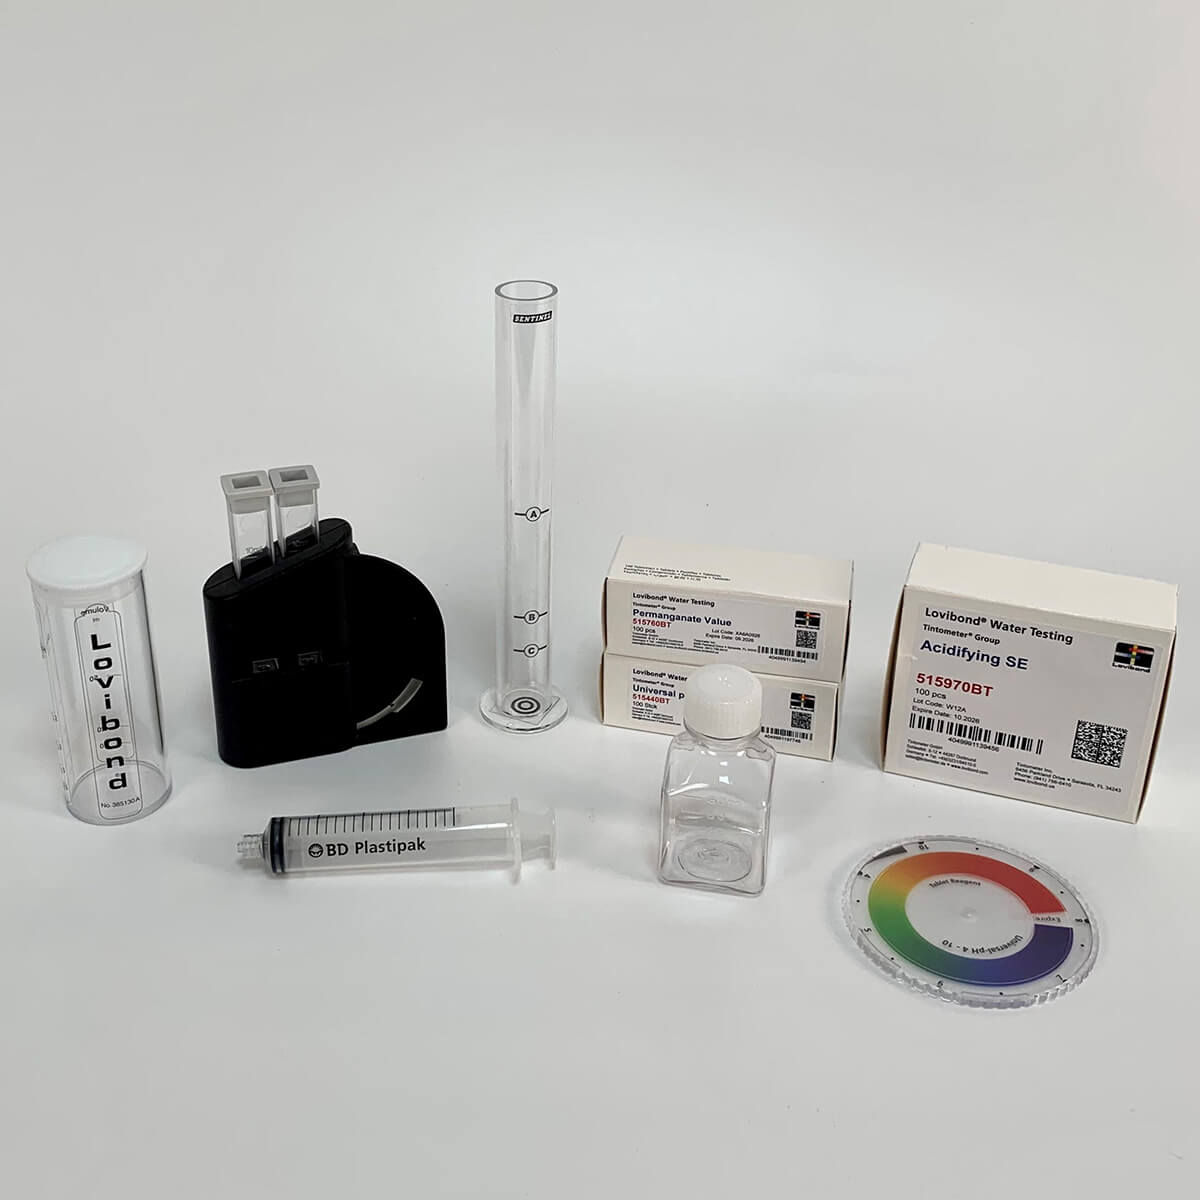 Potable Water Safety Kit, Test Kits, Lovibond